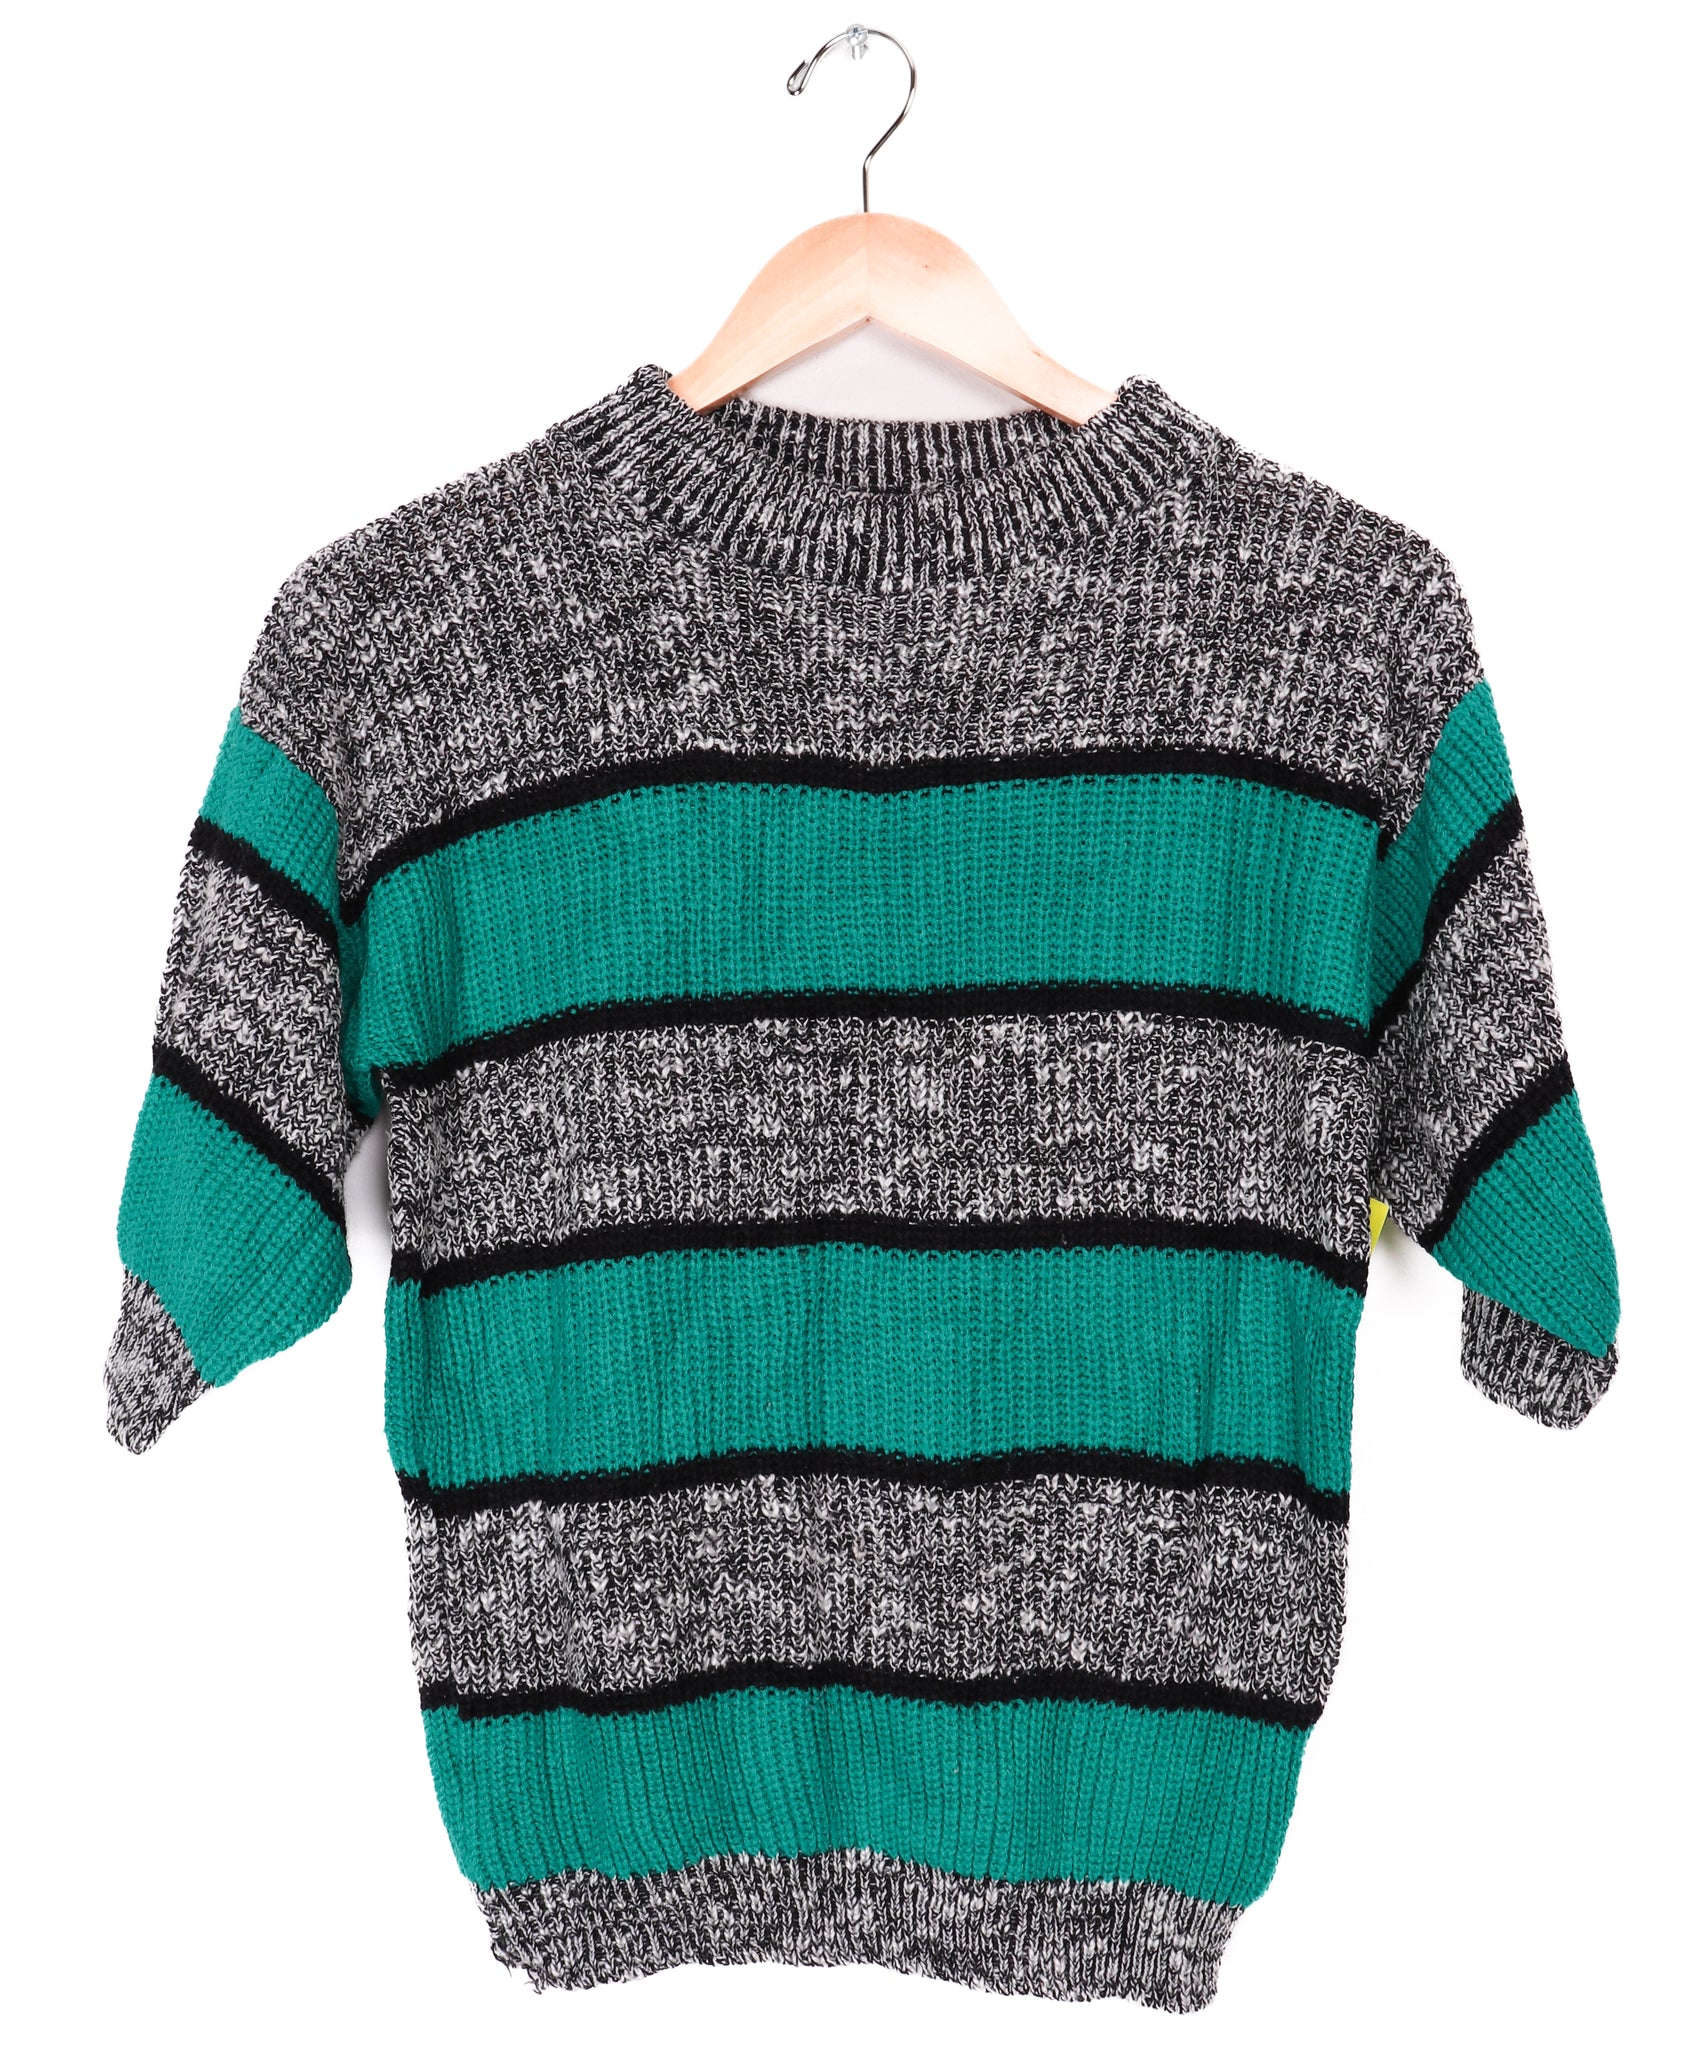 90s Adele Knitwear Teal Striped Sweater Top